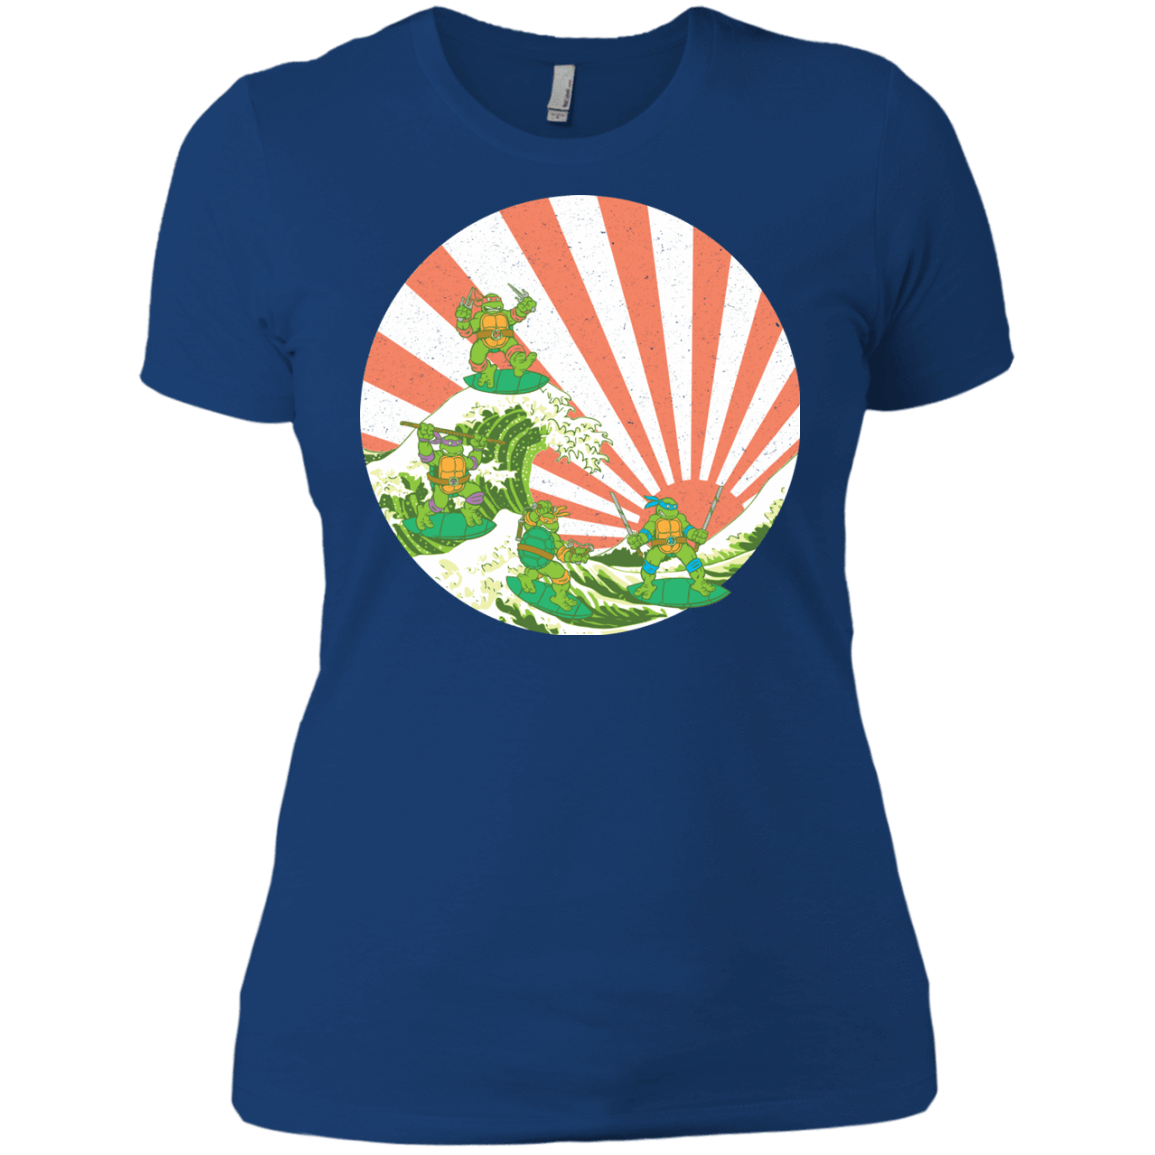 T-Shirts Royal / X-Small The Great Wave Off Cowabunga Women's Premium T-Shirt